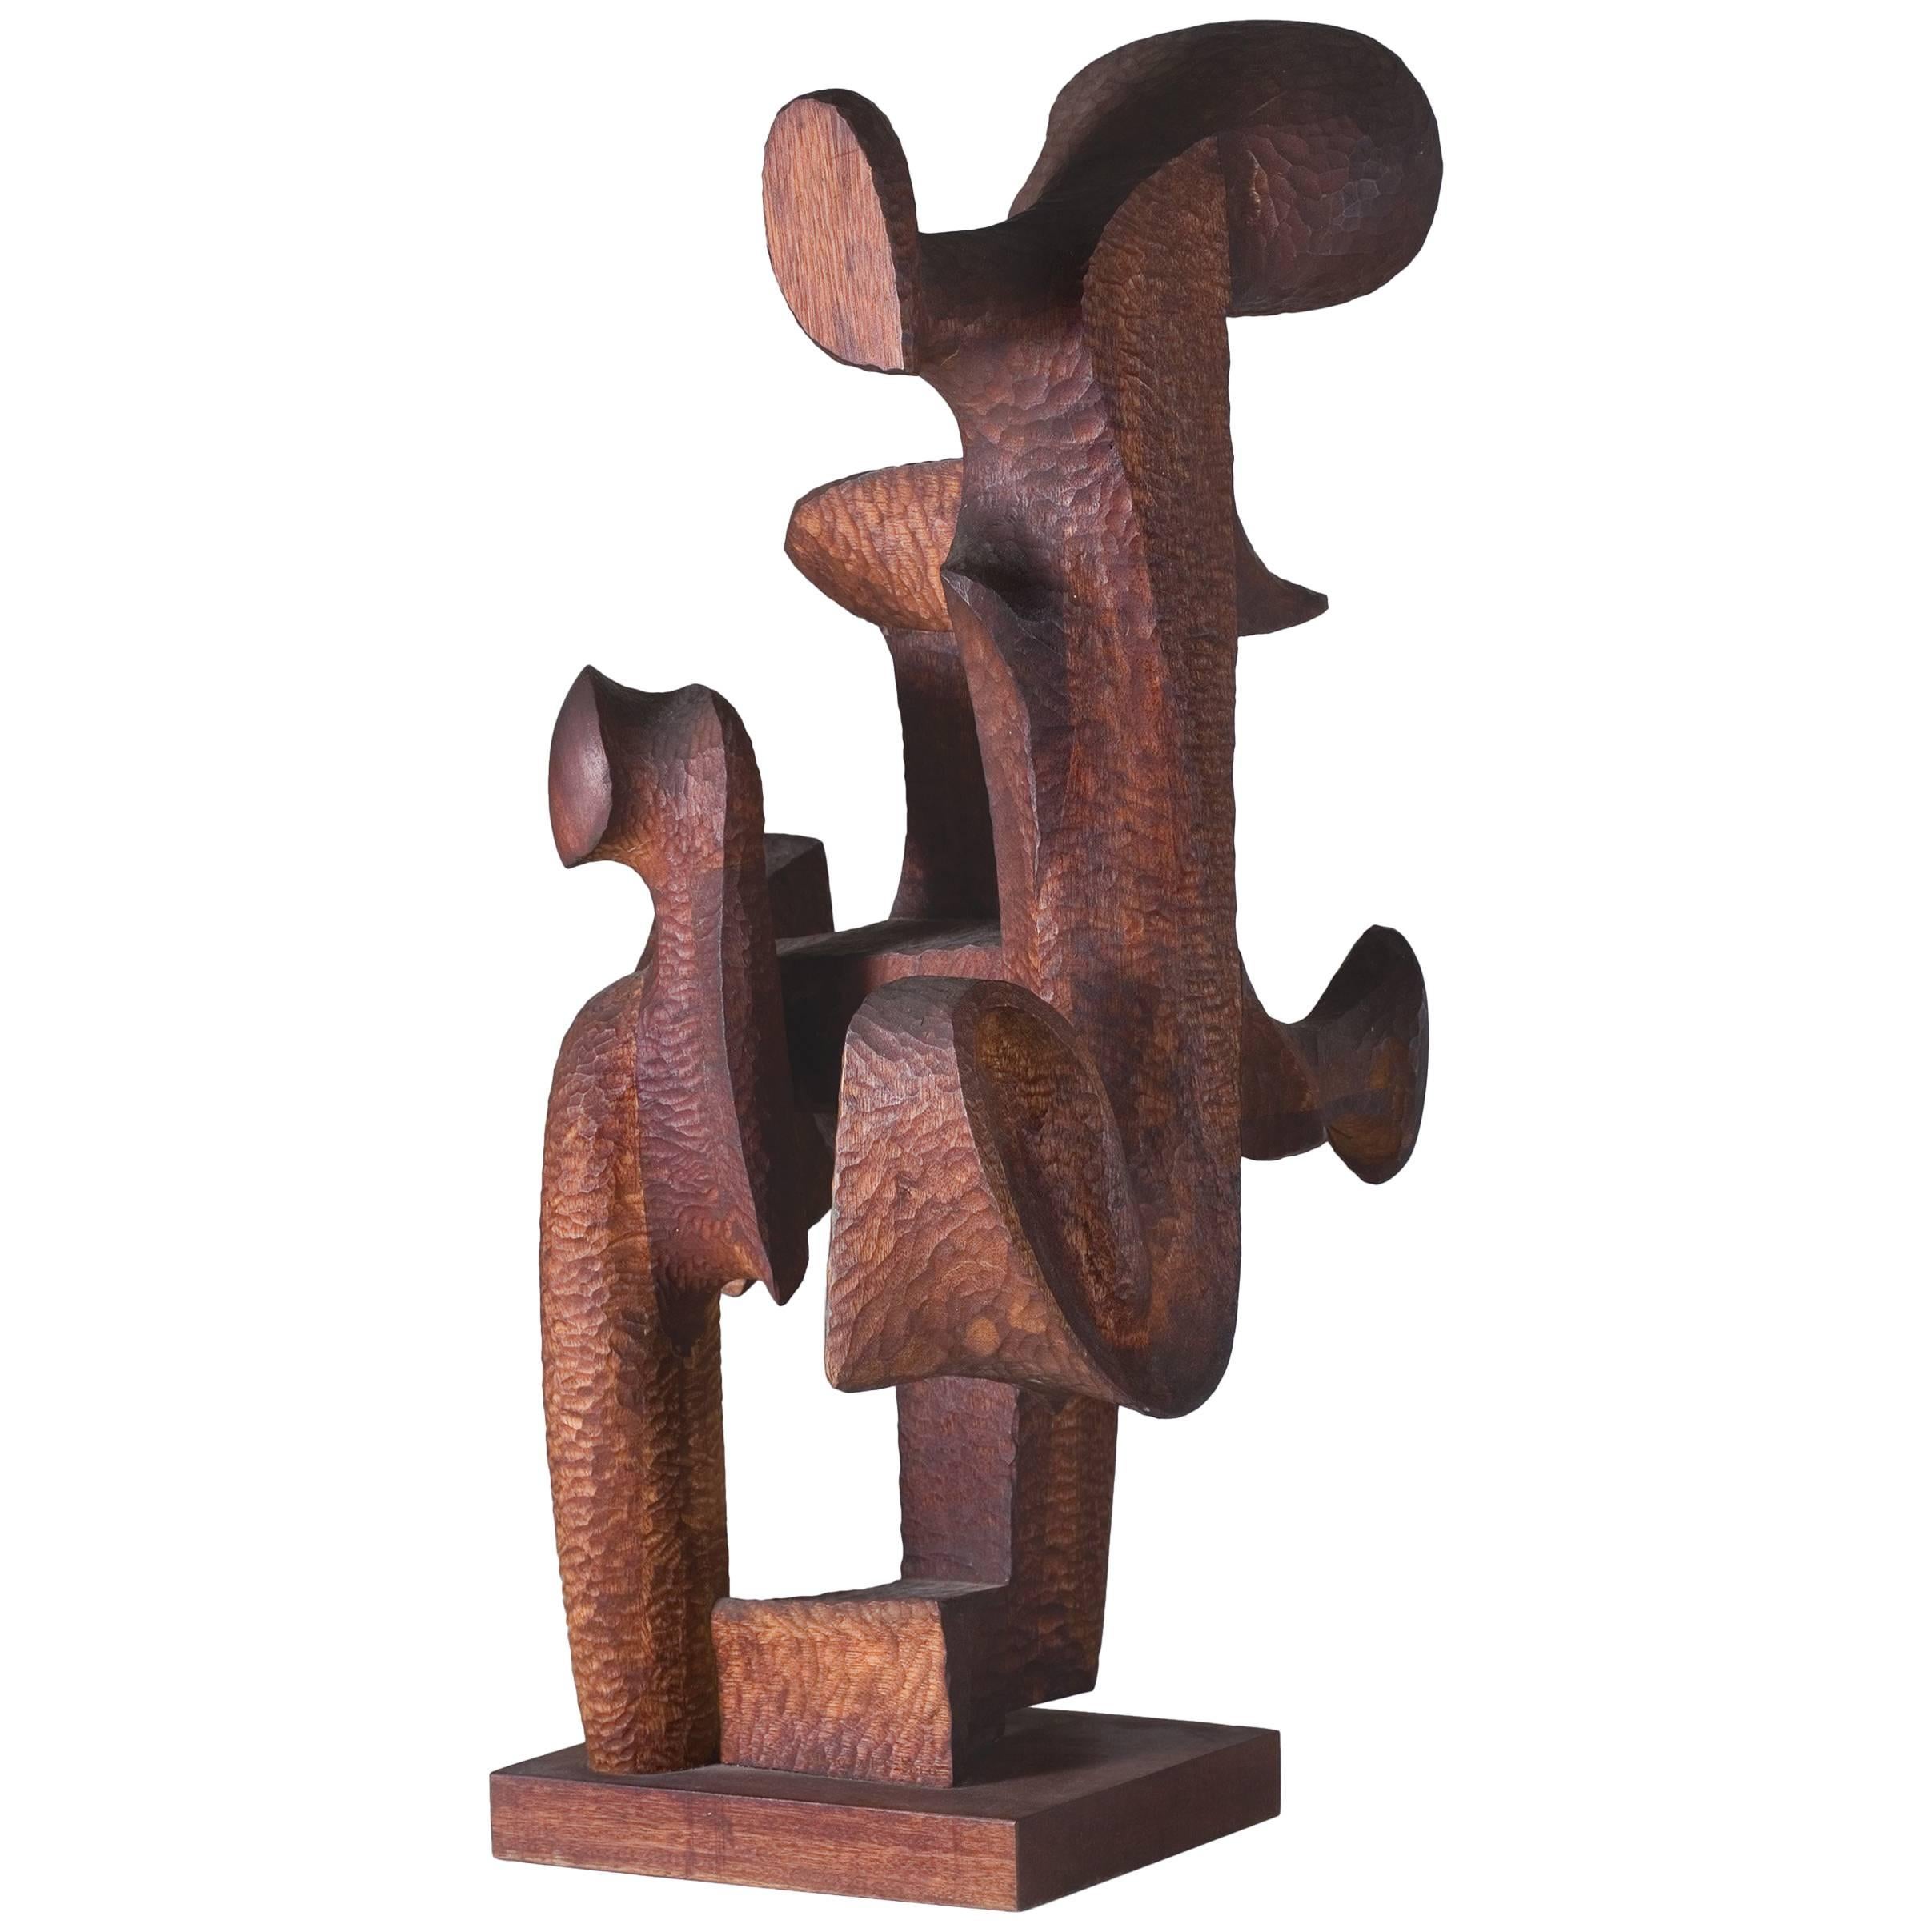 Mario Dal Fabbro, "Desert Vision" Wood Sculpture, United States, 1969